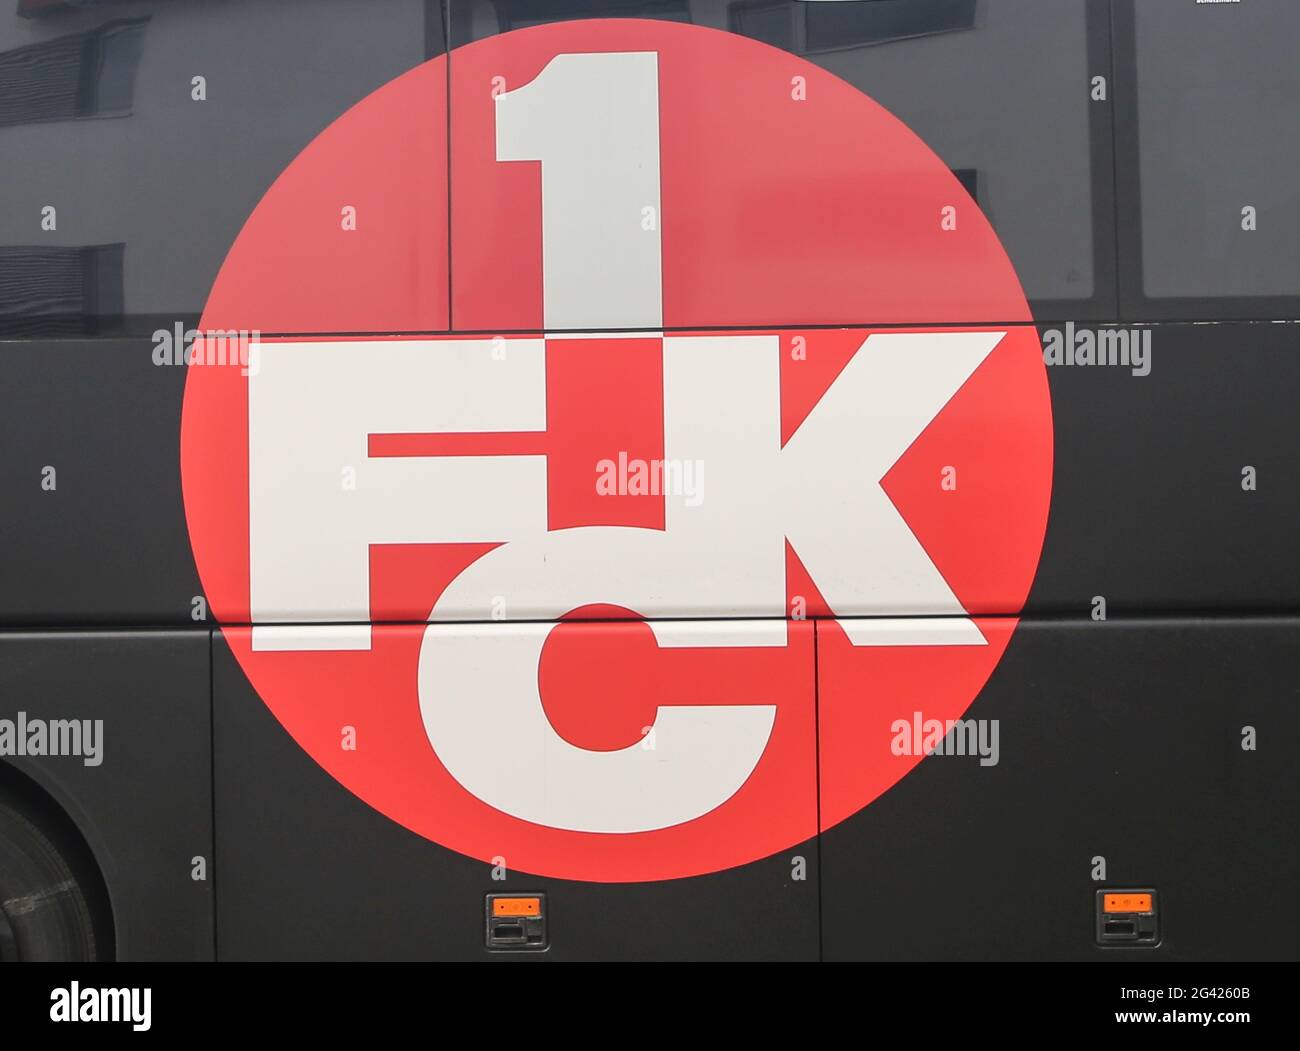 Club logo on team bus 1.FC Kaiserslautern DFB 3.Liga season 2020-21 Stock Photo